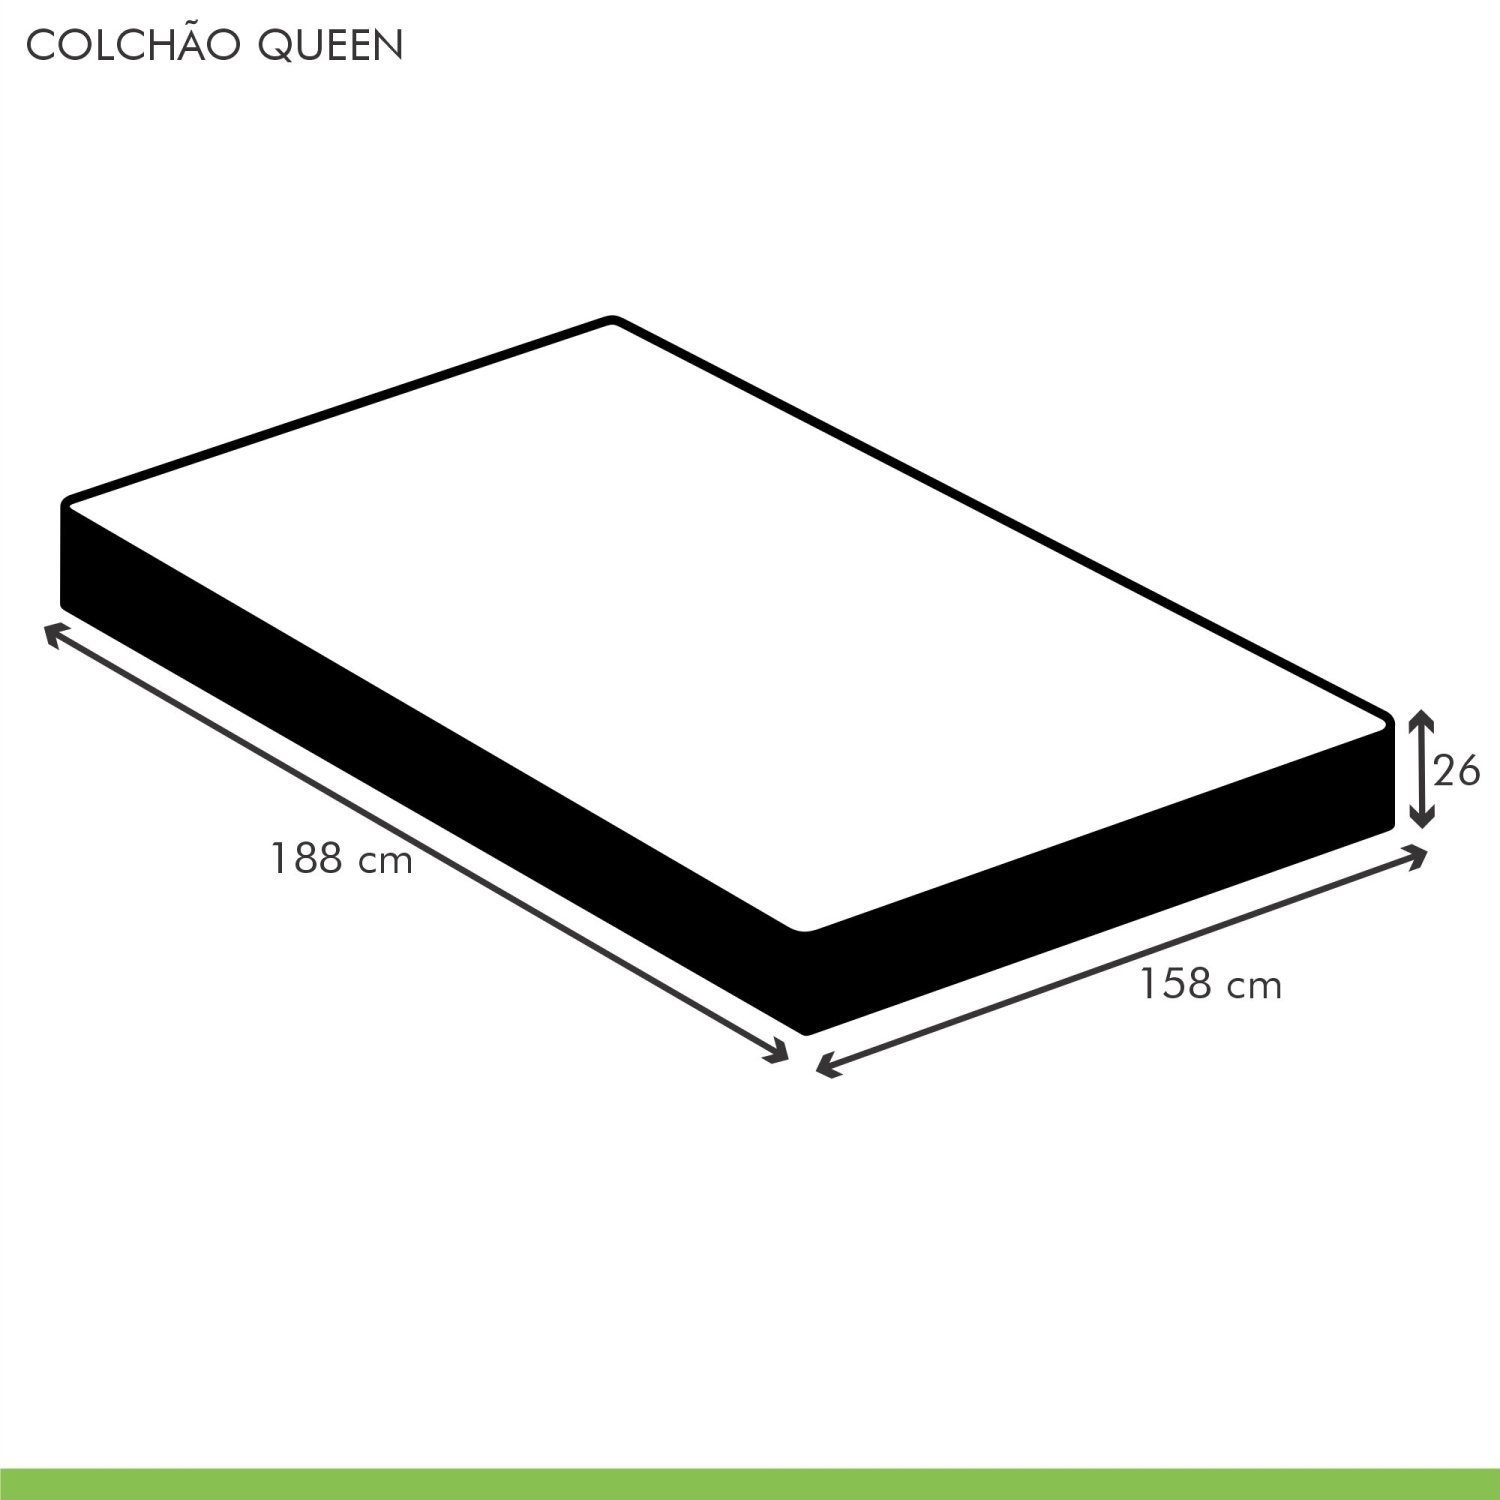 Colchão Queen Quality D33 Duoface 26x158x198cm  - 6